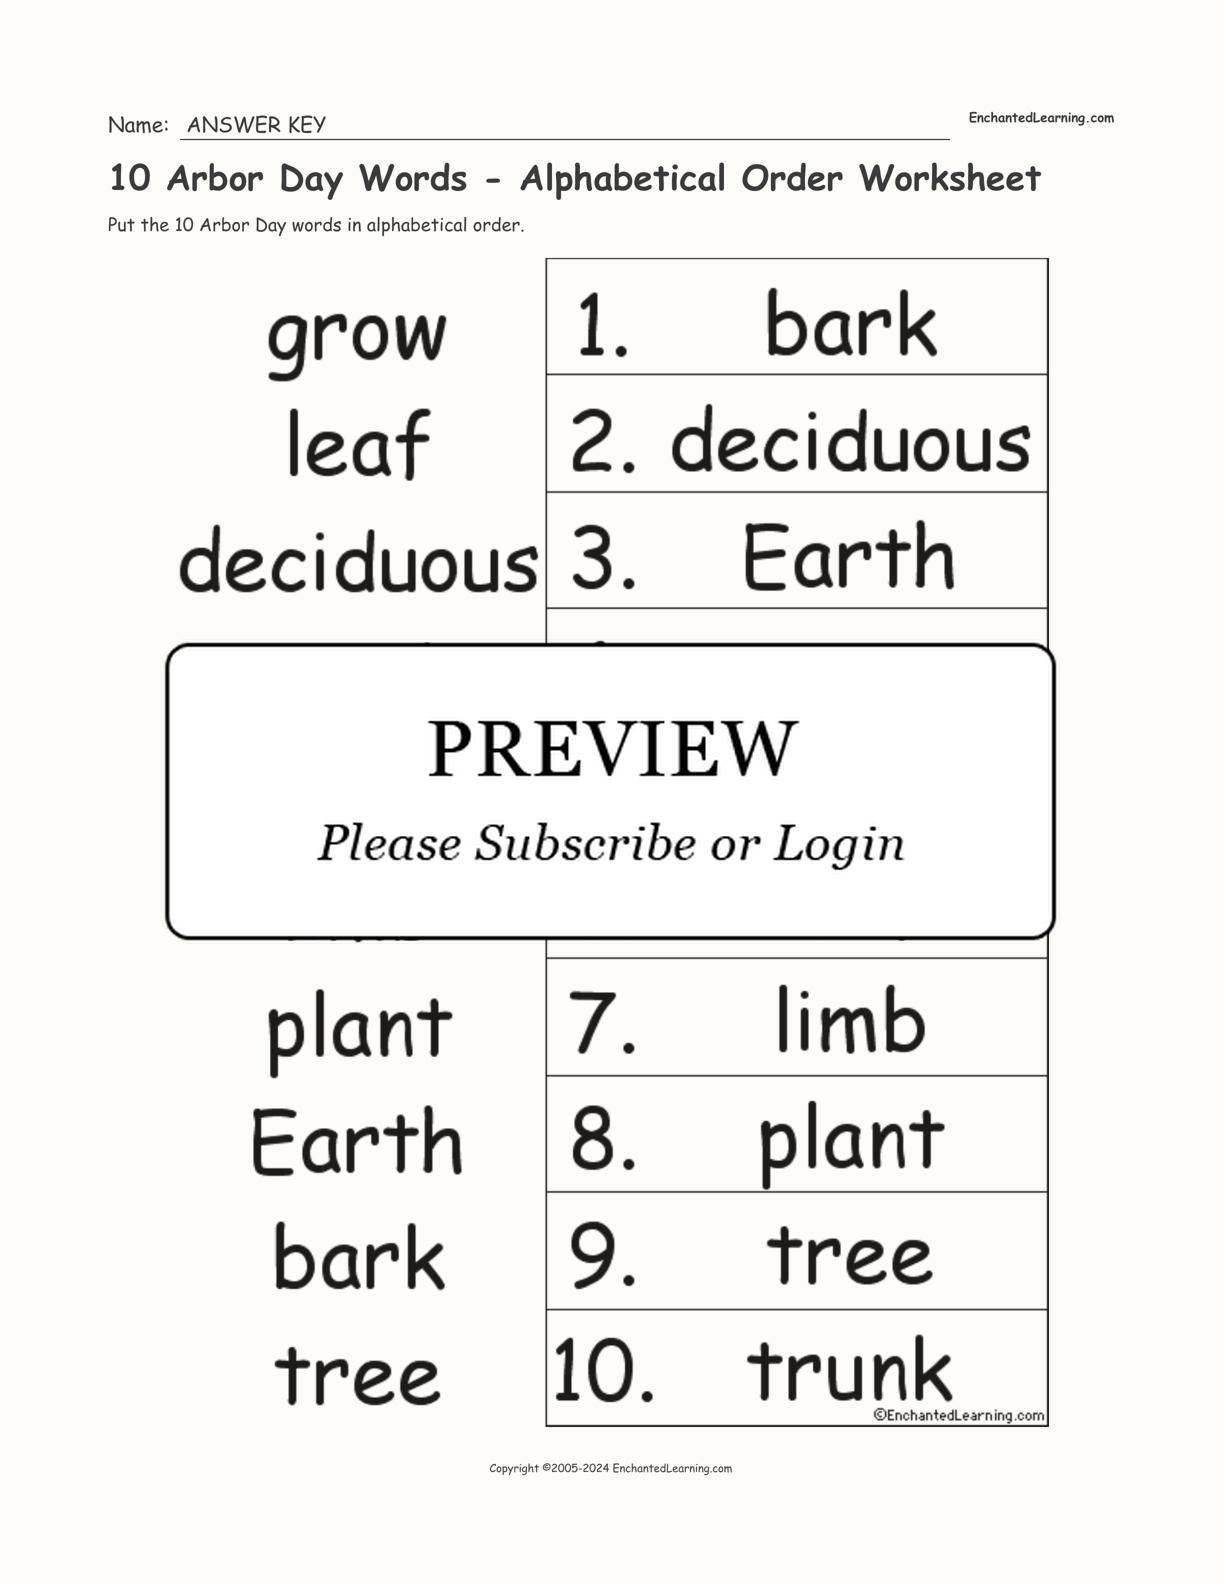 10 Arbor Day Words - Alphabetical Order Worksheet interactive worksheet page 2